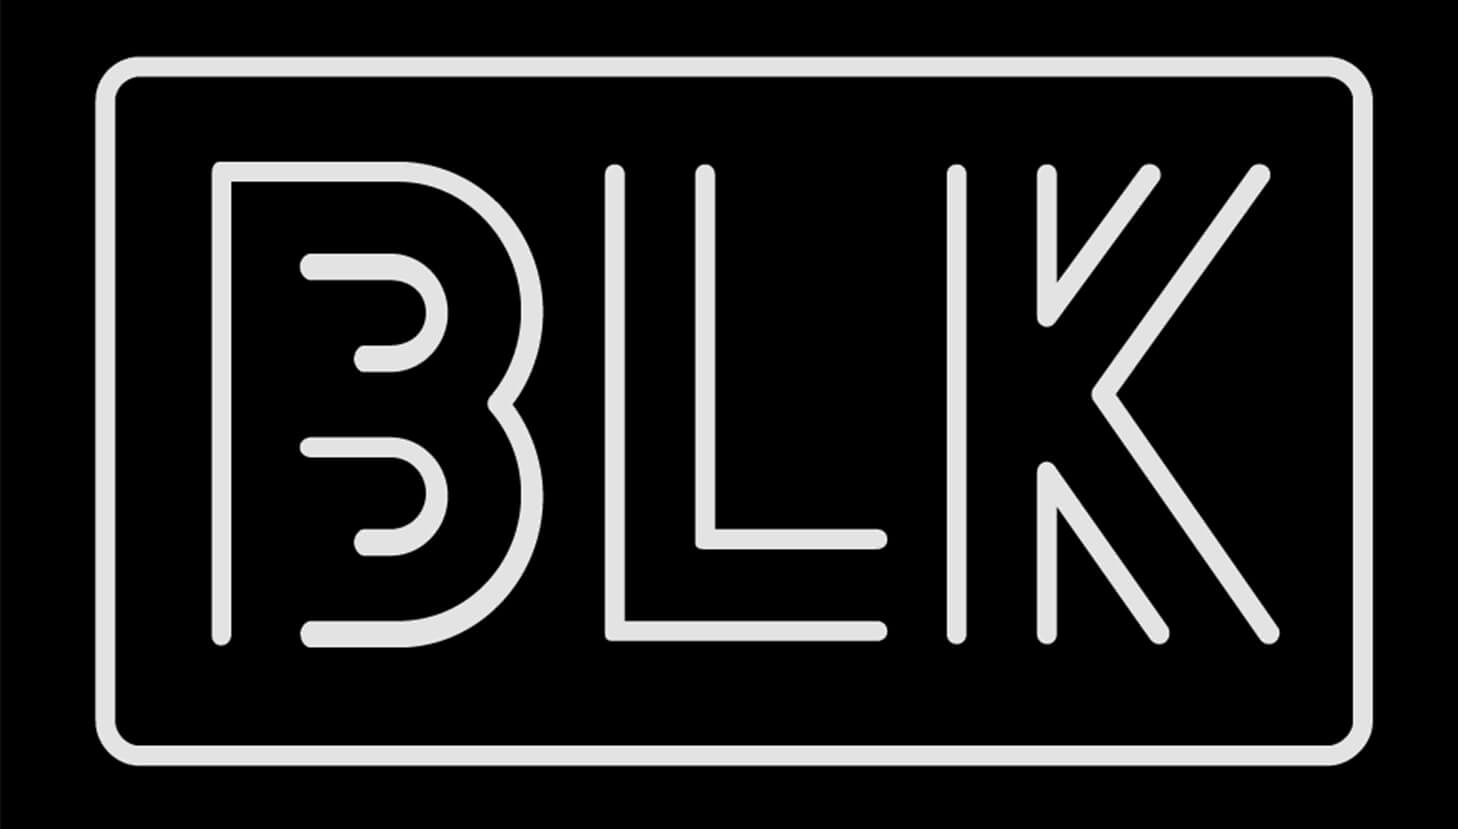 blk logo